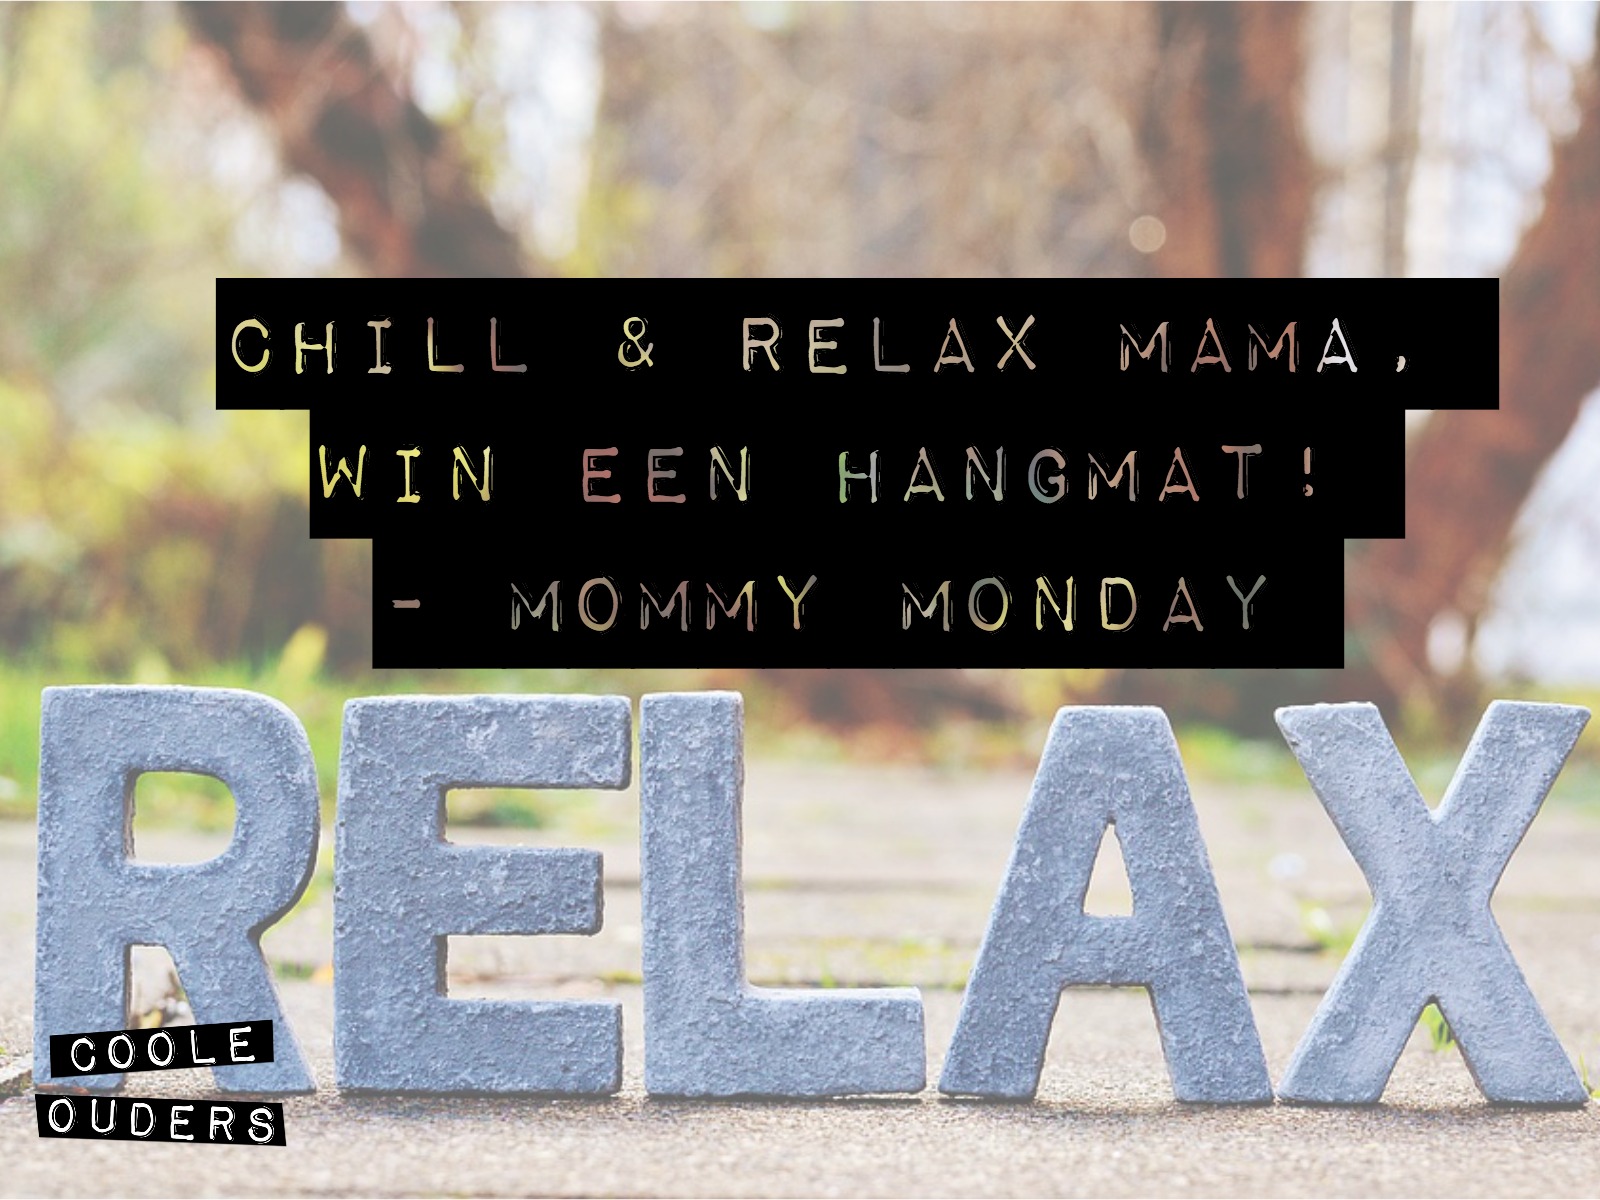 Chill & relax mama, win een hangmat – Mommy Monday VERLOPEN